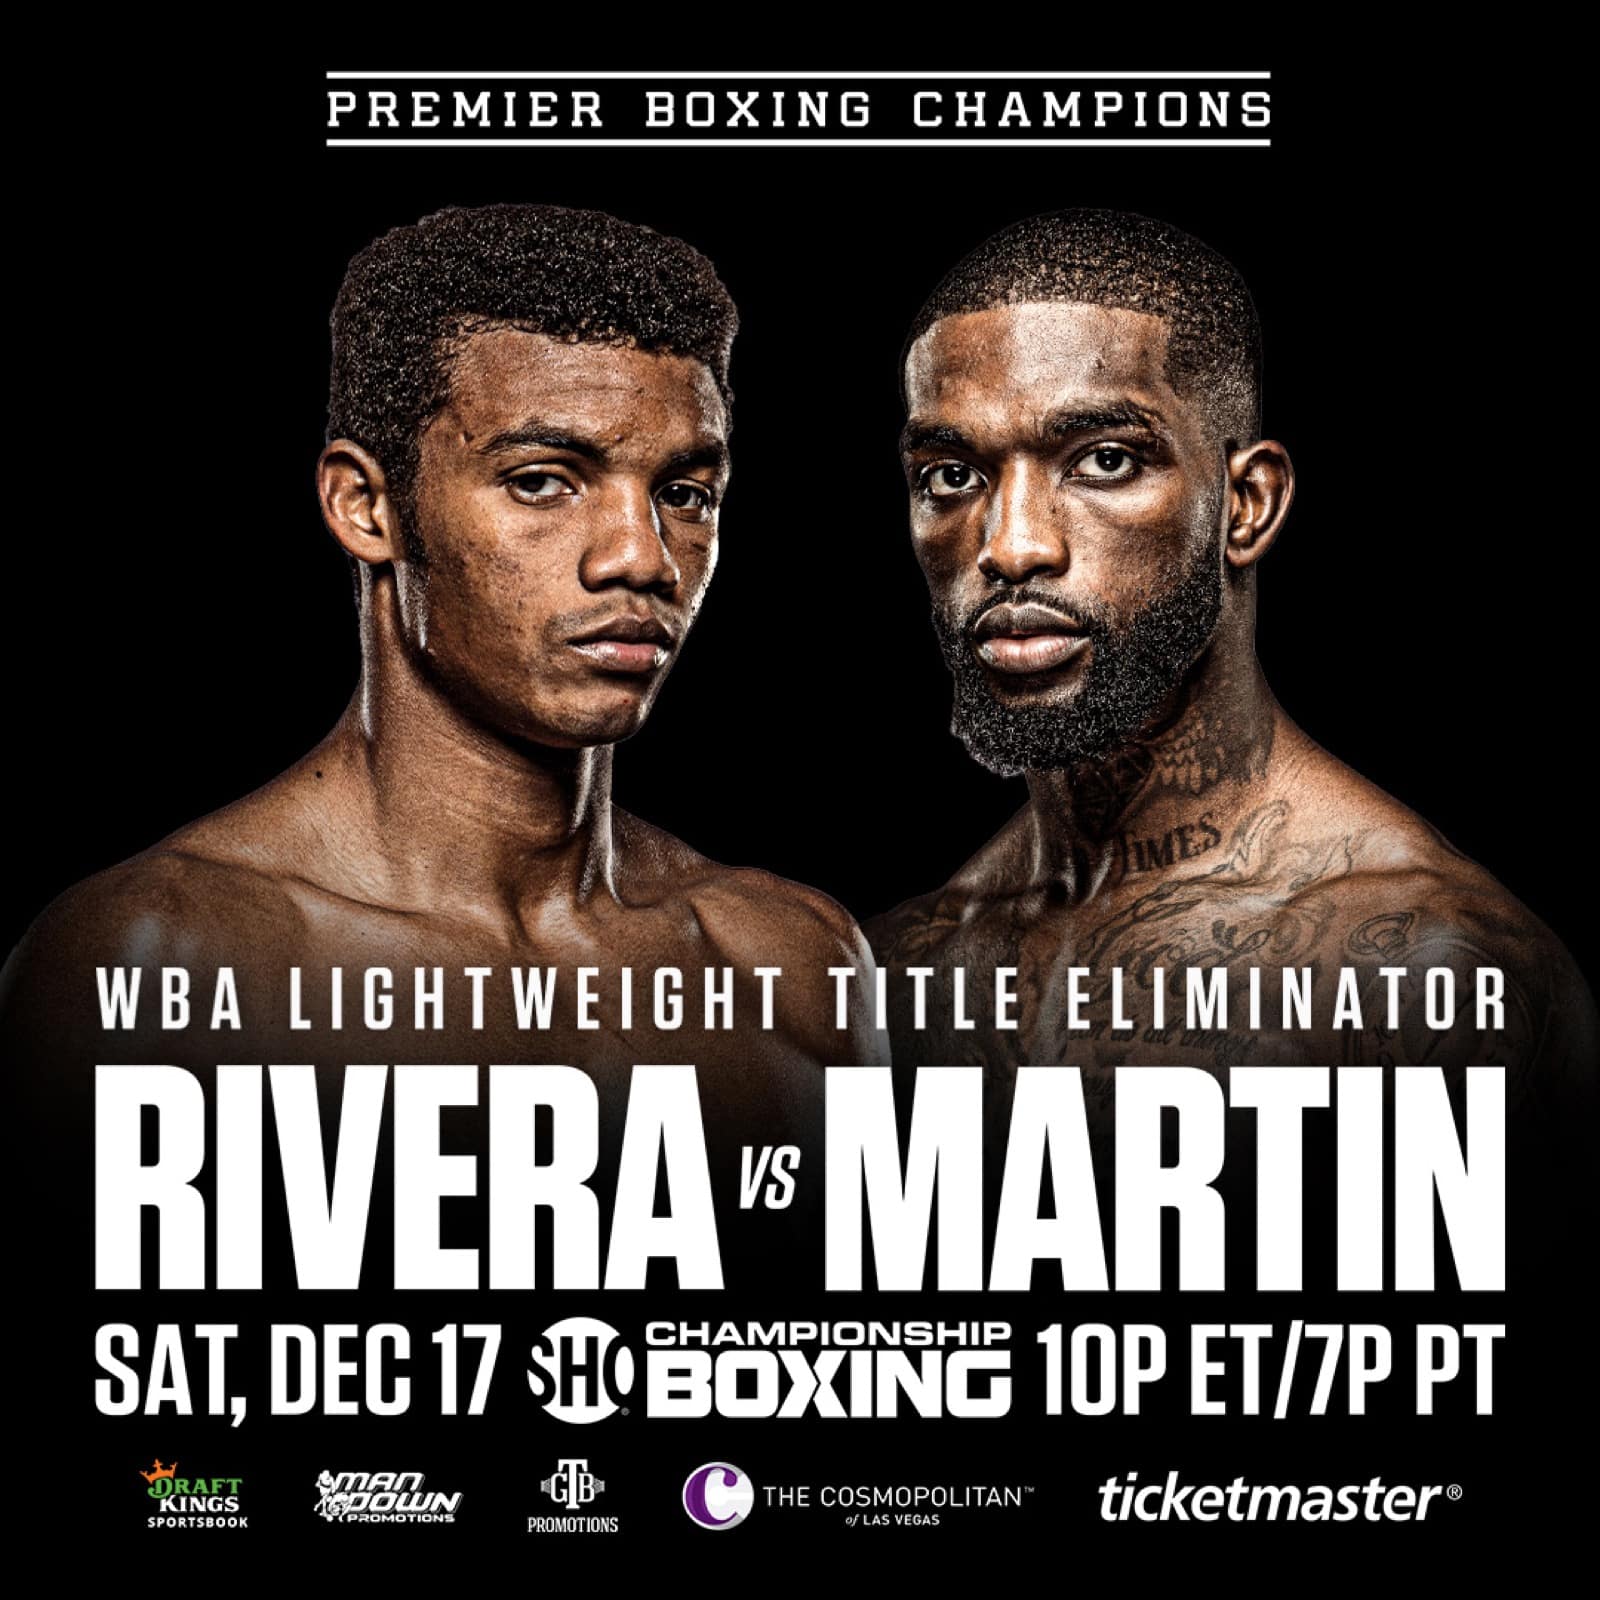 Rivera vs Martin - Showtime - Dec. 17 - 9 pm ET